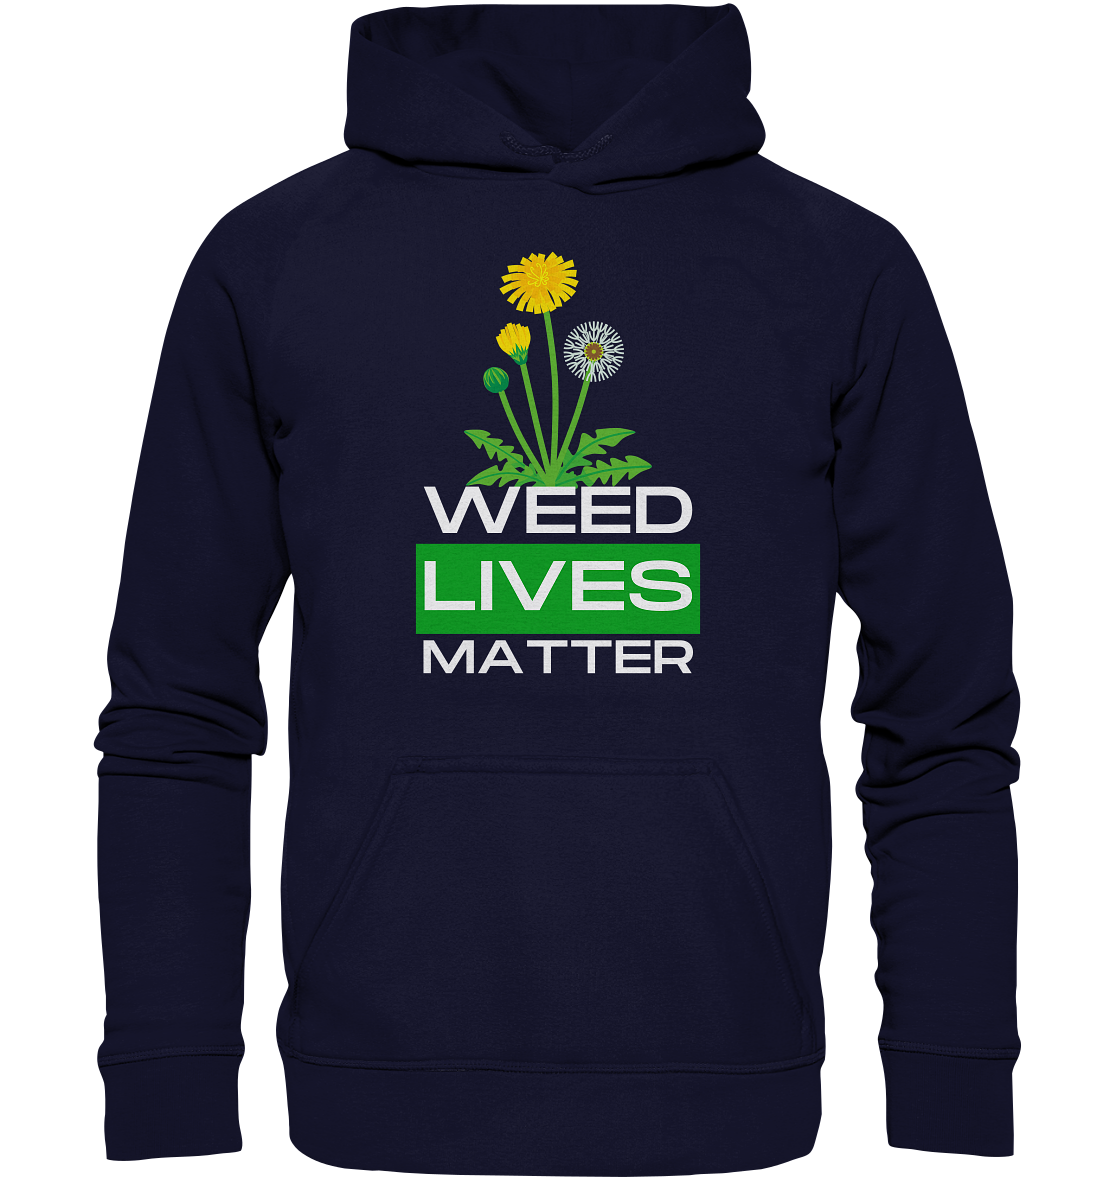 Weed lives matter - Hoodie